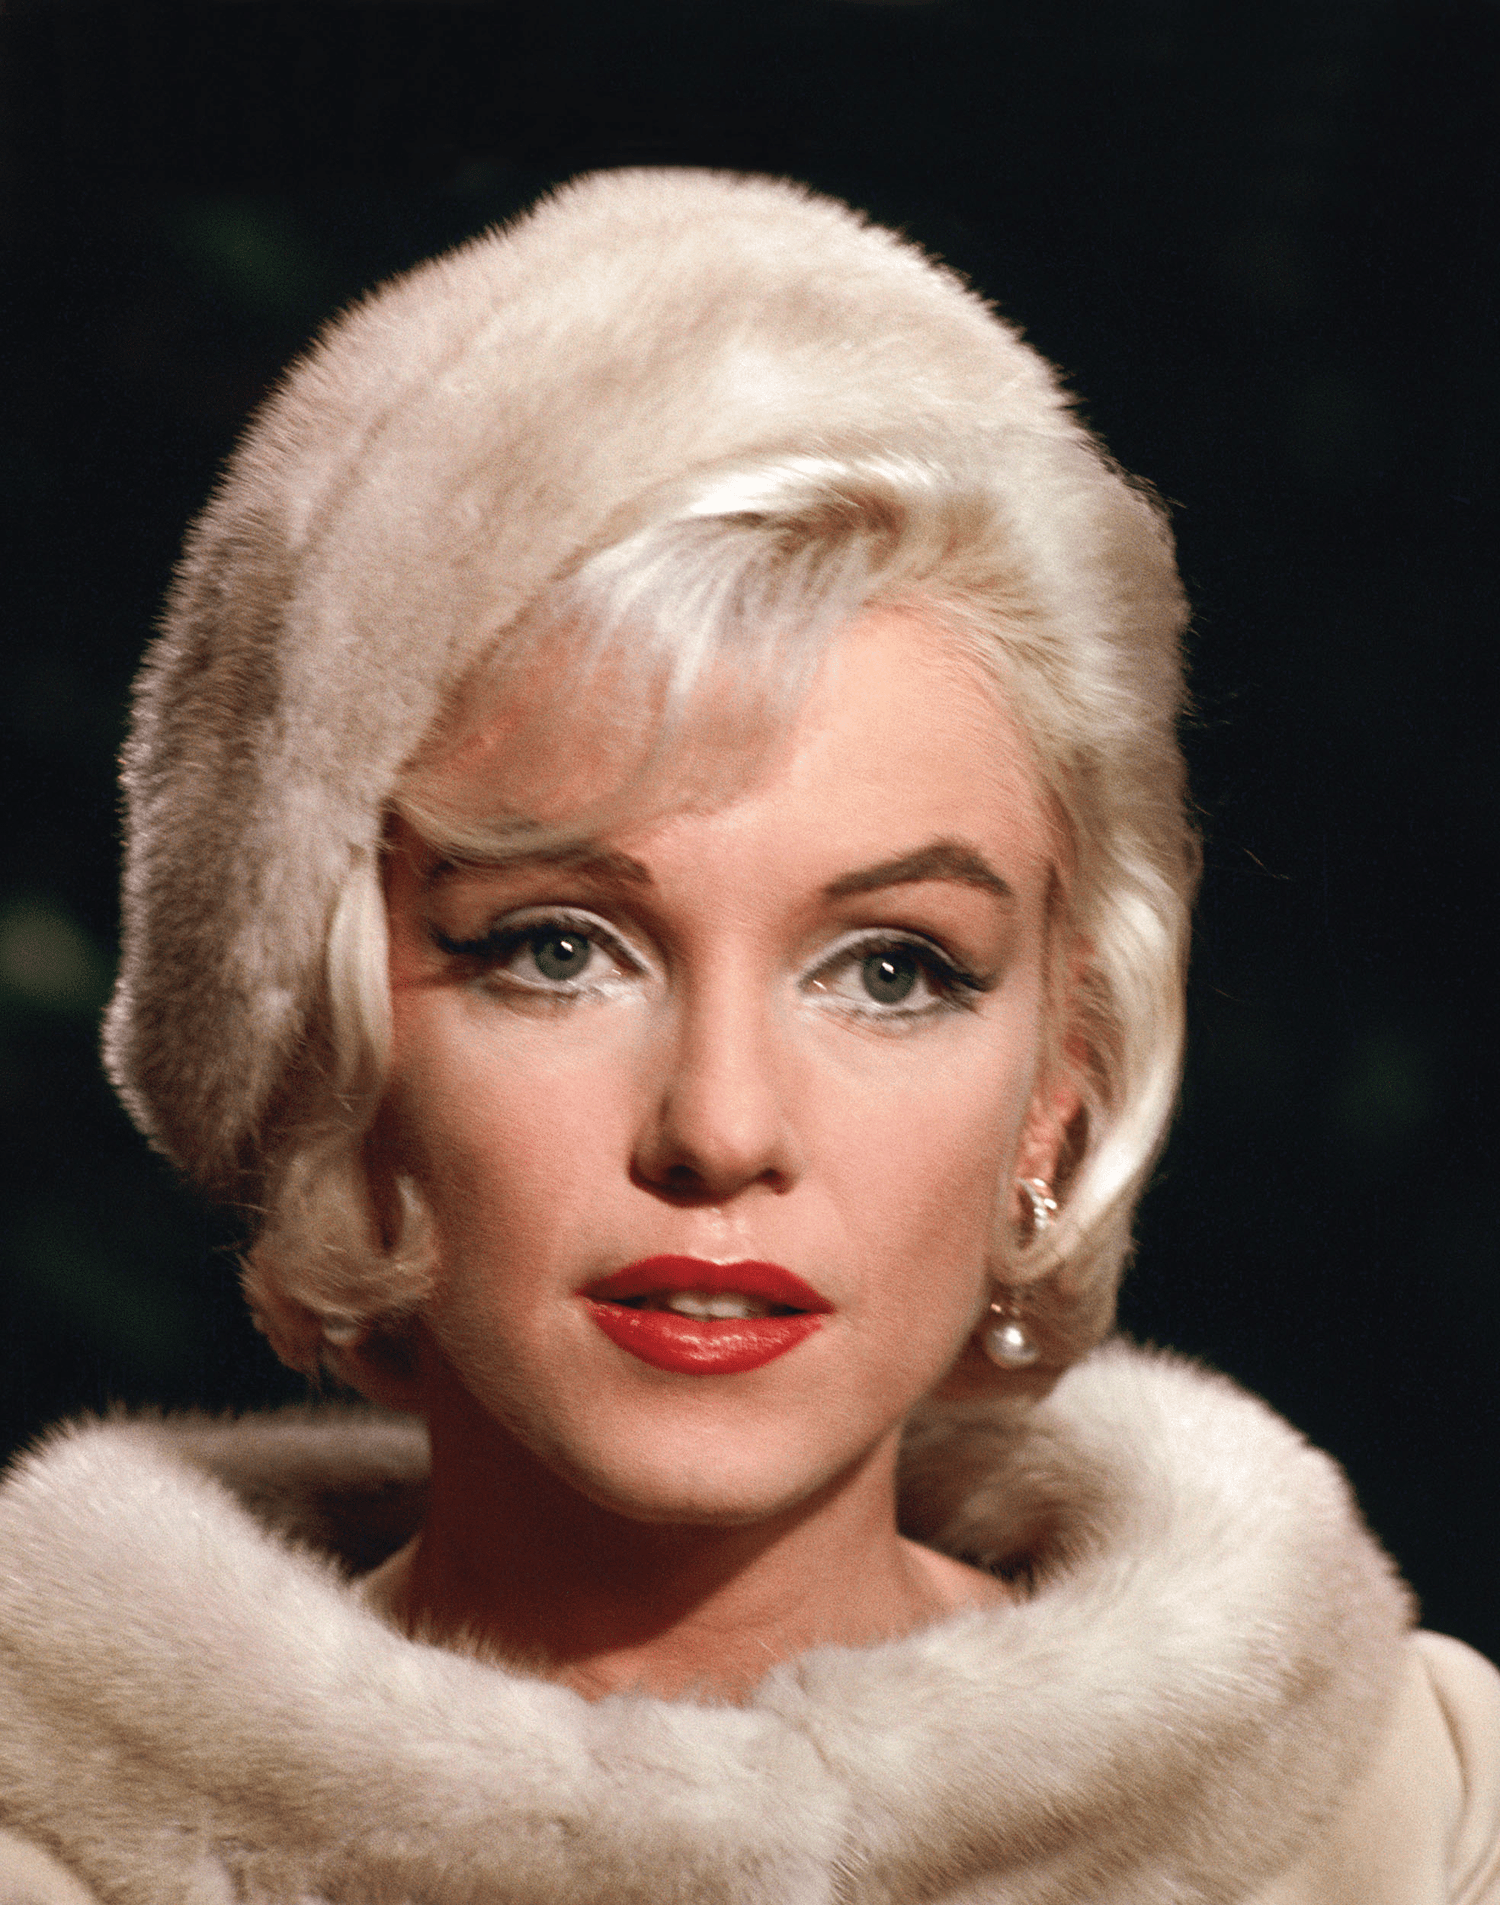 Marilyn Monroe Color Headshot by Lawrence Schiller, 13/75